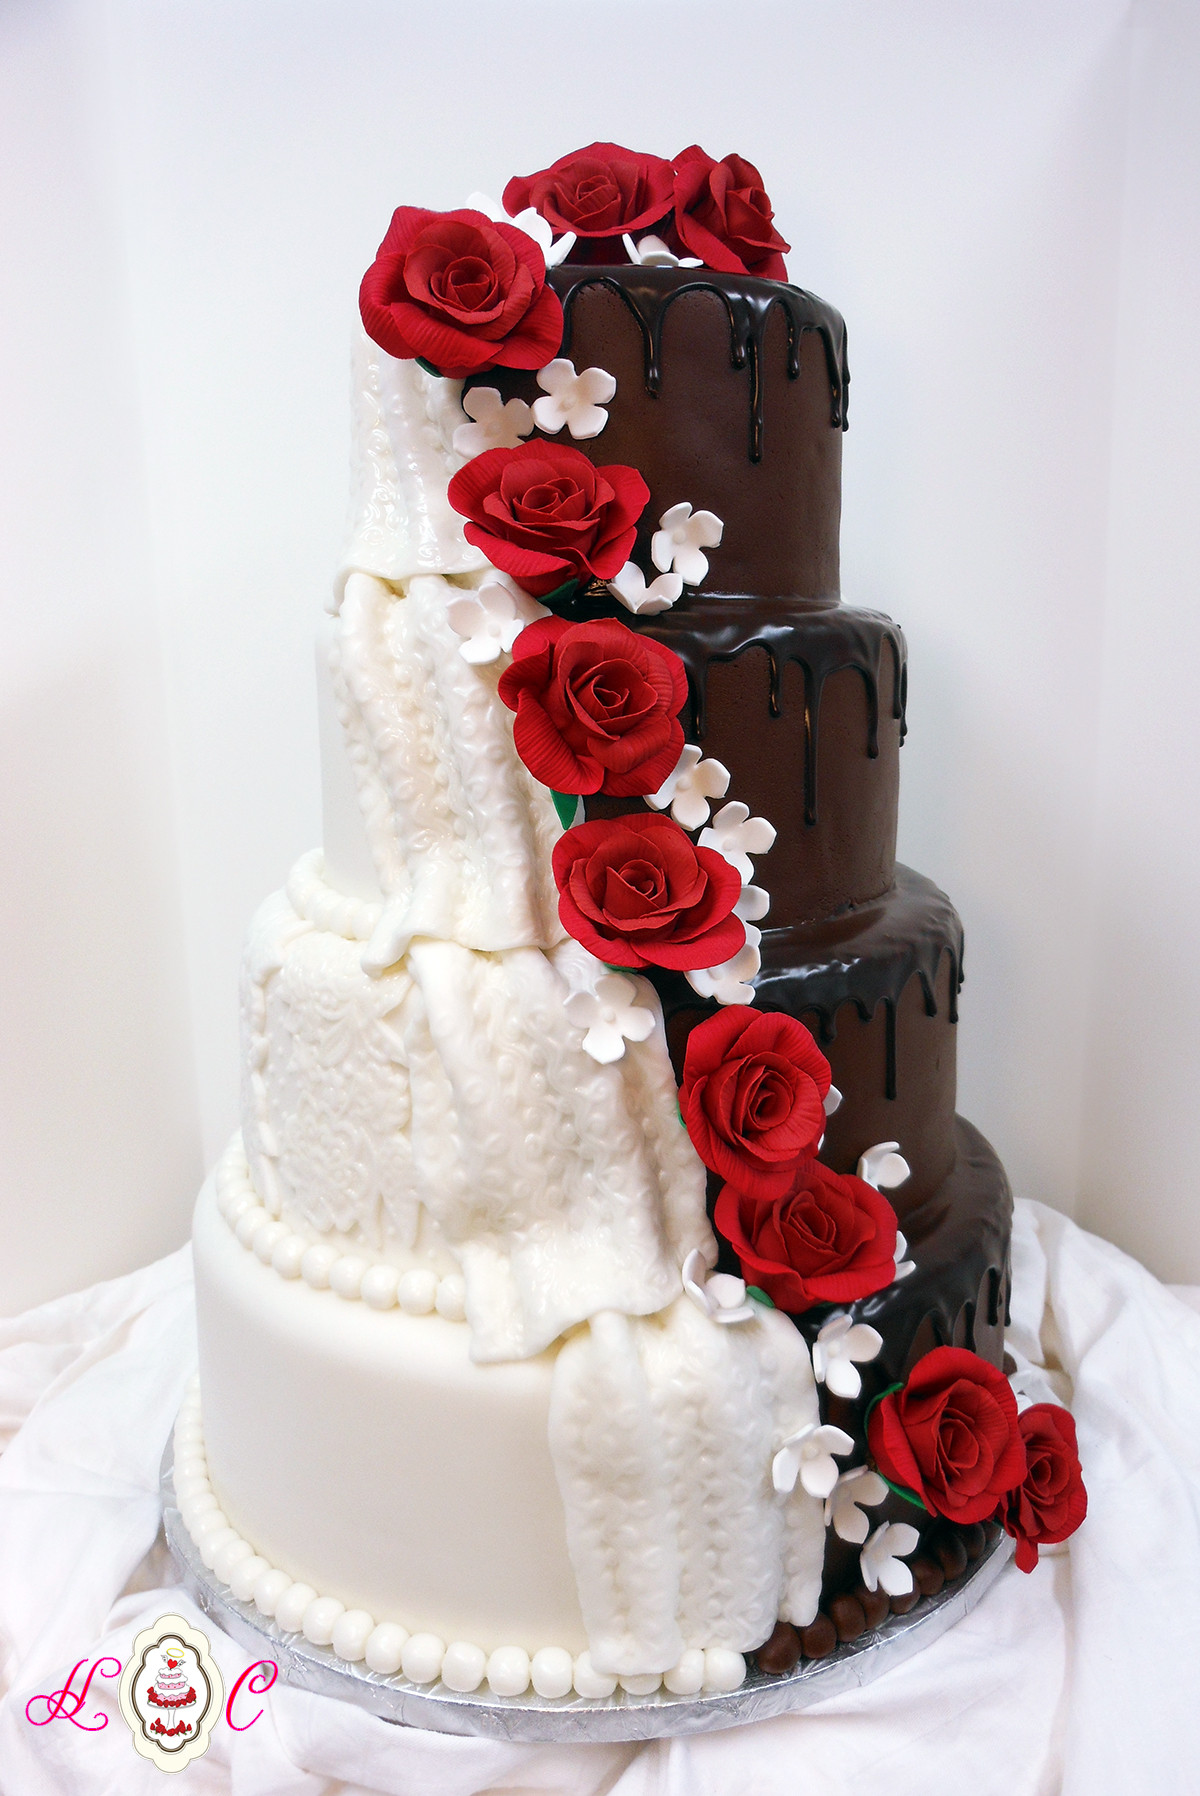 Groom Wedding Cakes
 12 Creative Wedding Cake Ideas for the Bride and Groom